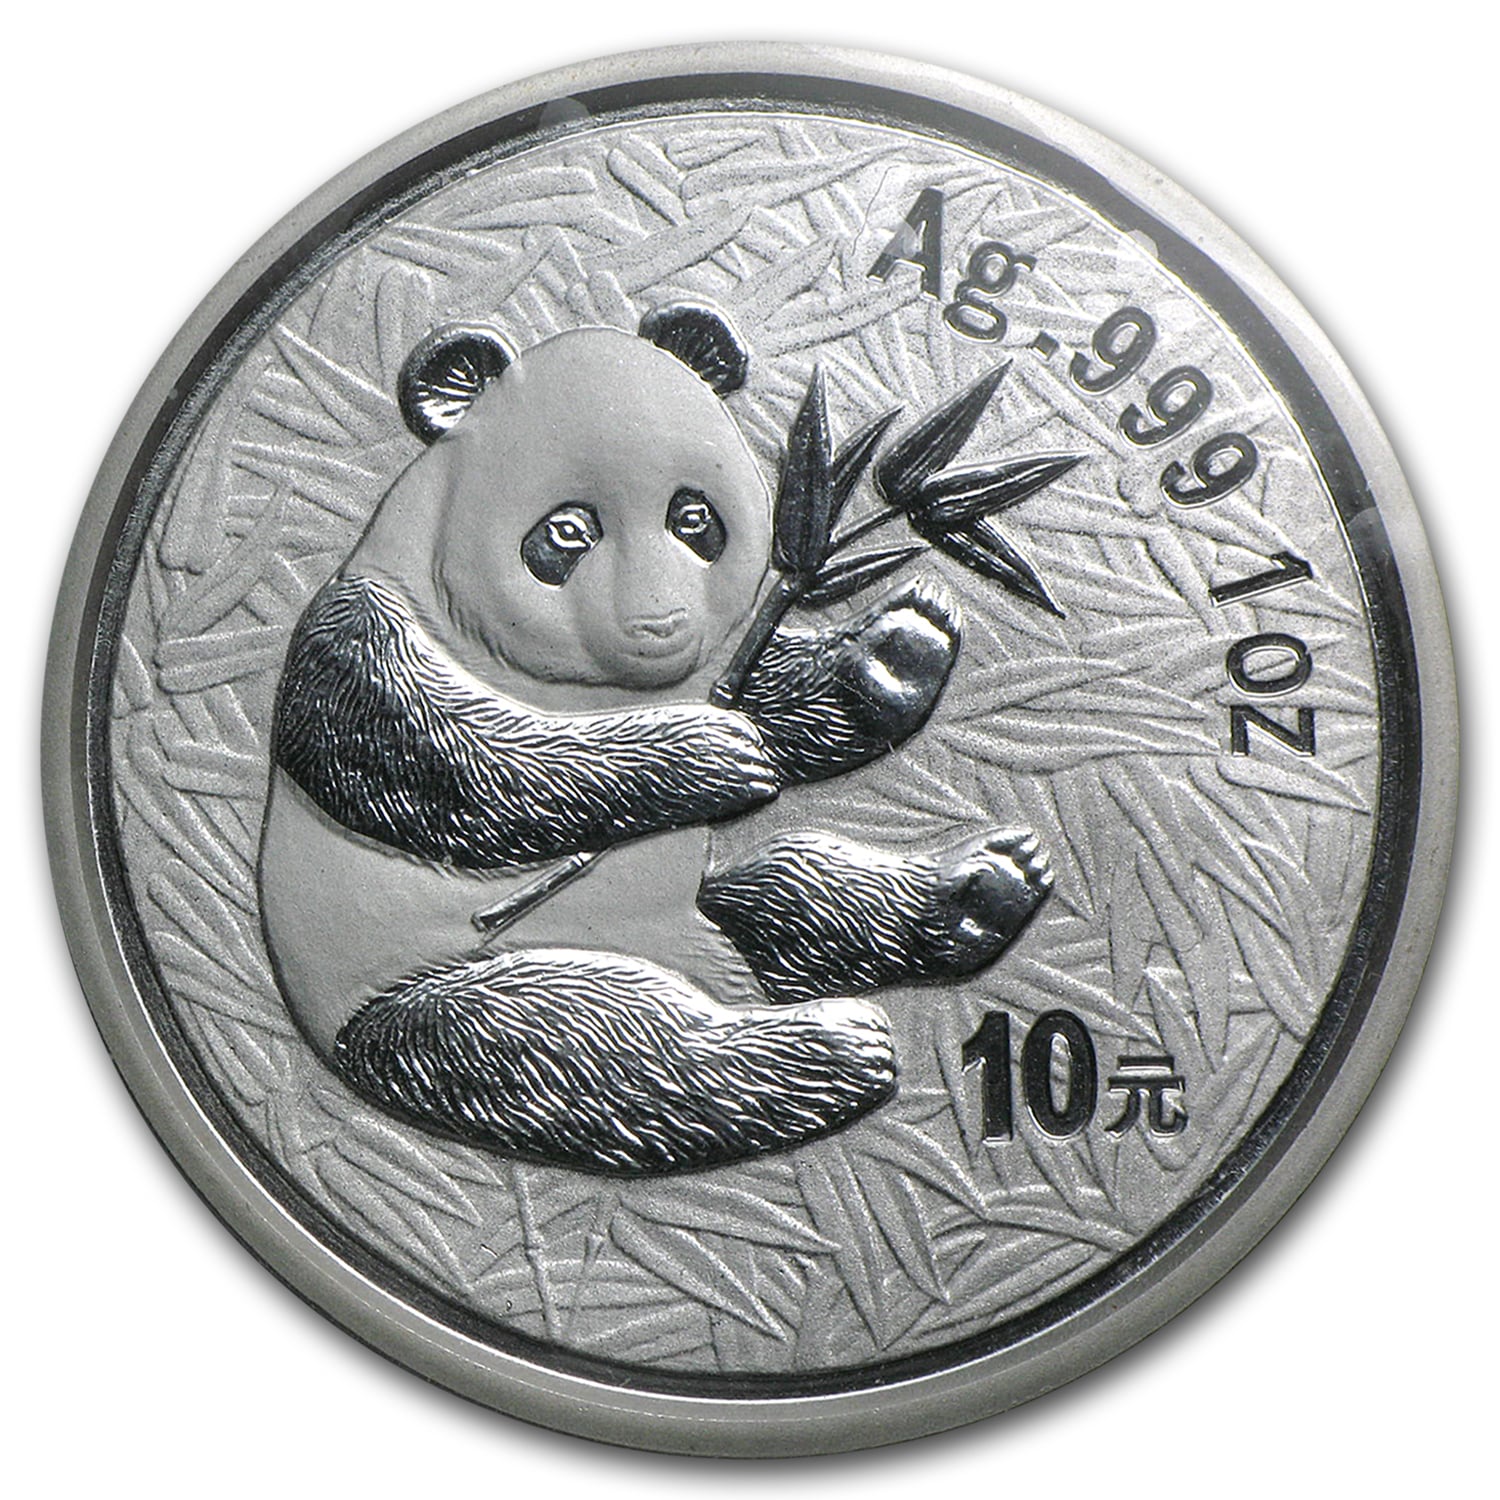 2000 China 1 oz Silver Panda BU